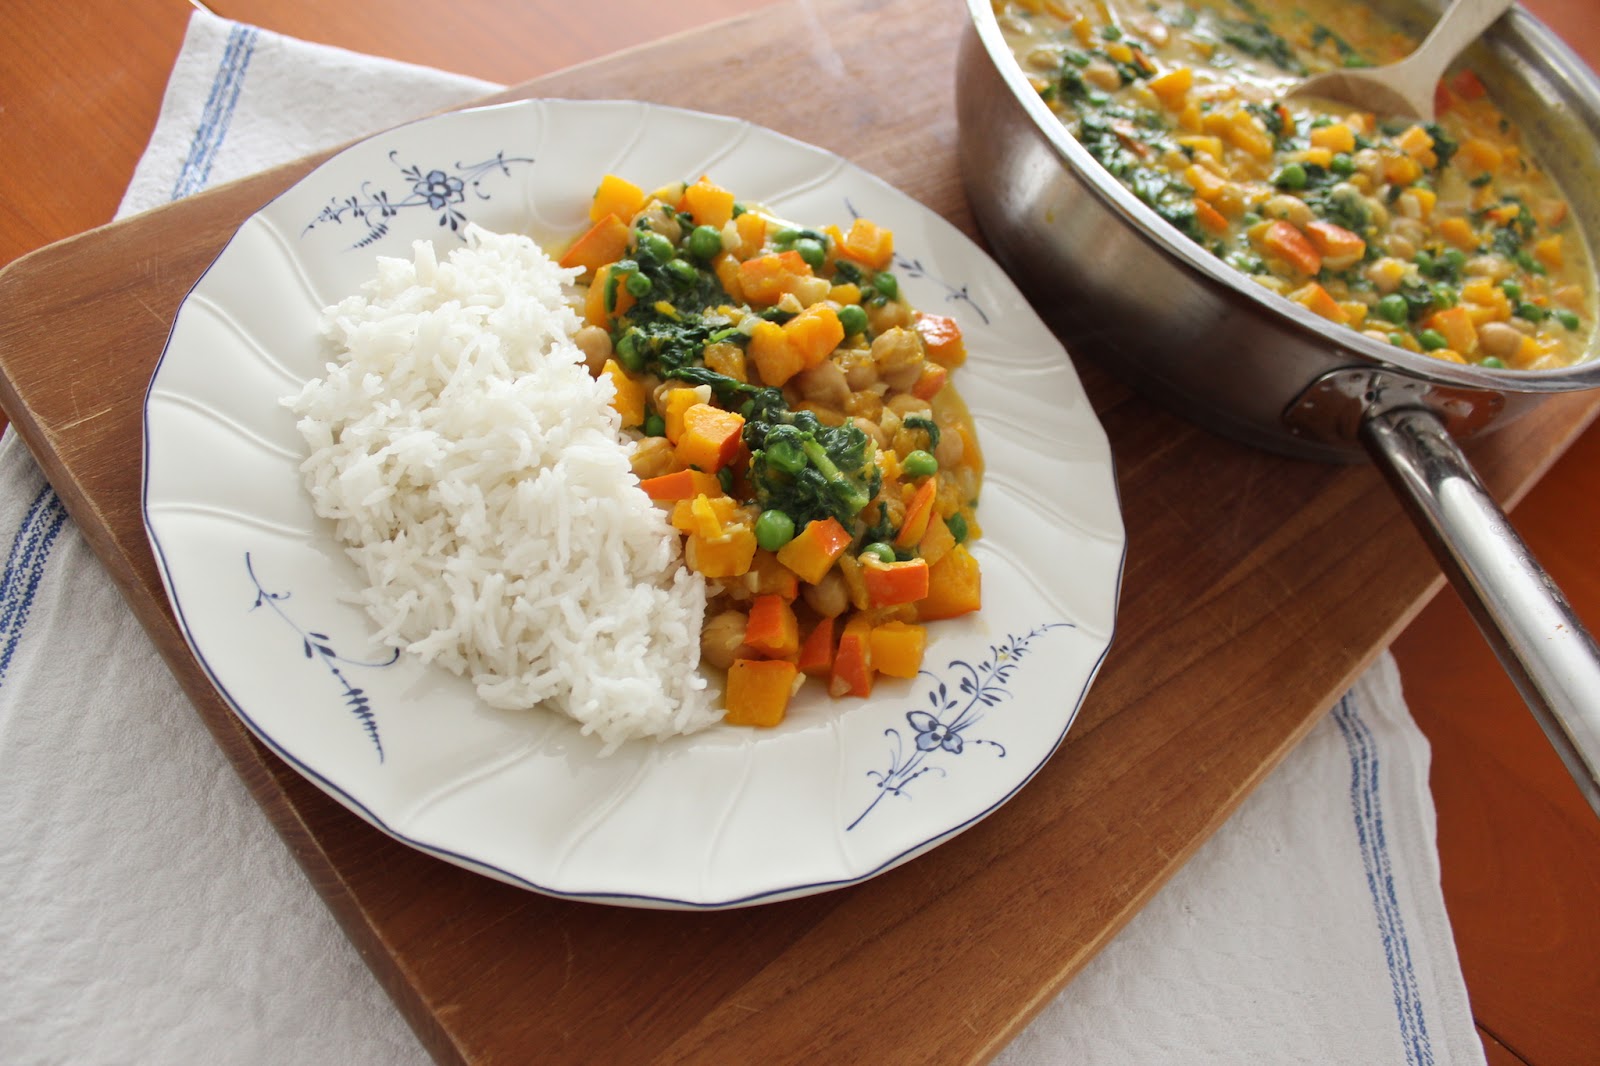 Vegan curry chickpeas pumpkin basmati rice http://theblondelion.blogspot.com/2015/01/food-vegan-curry-chickpeas-pumpkin.html